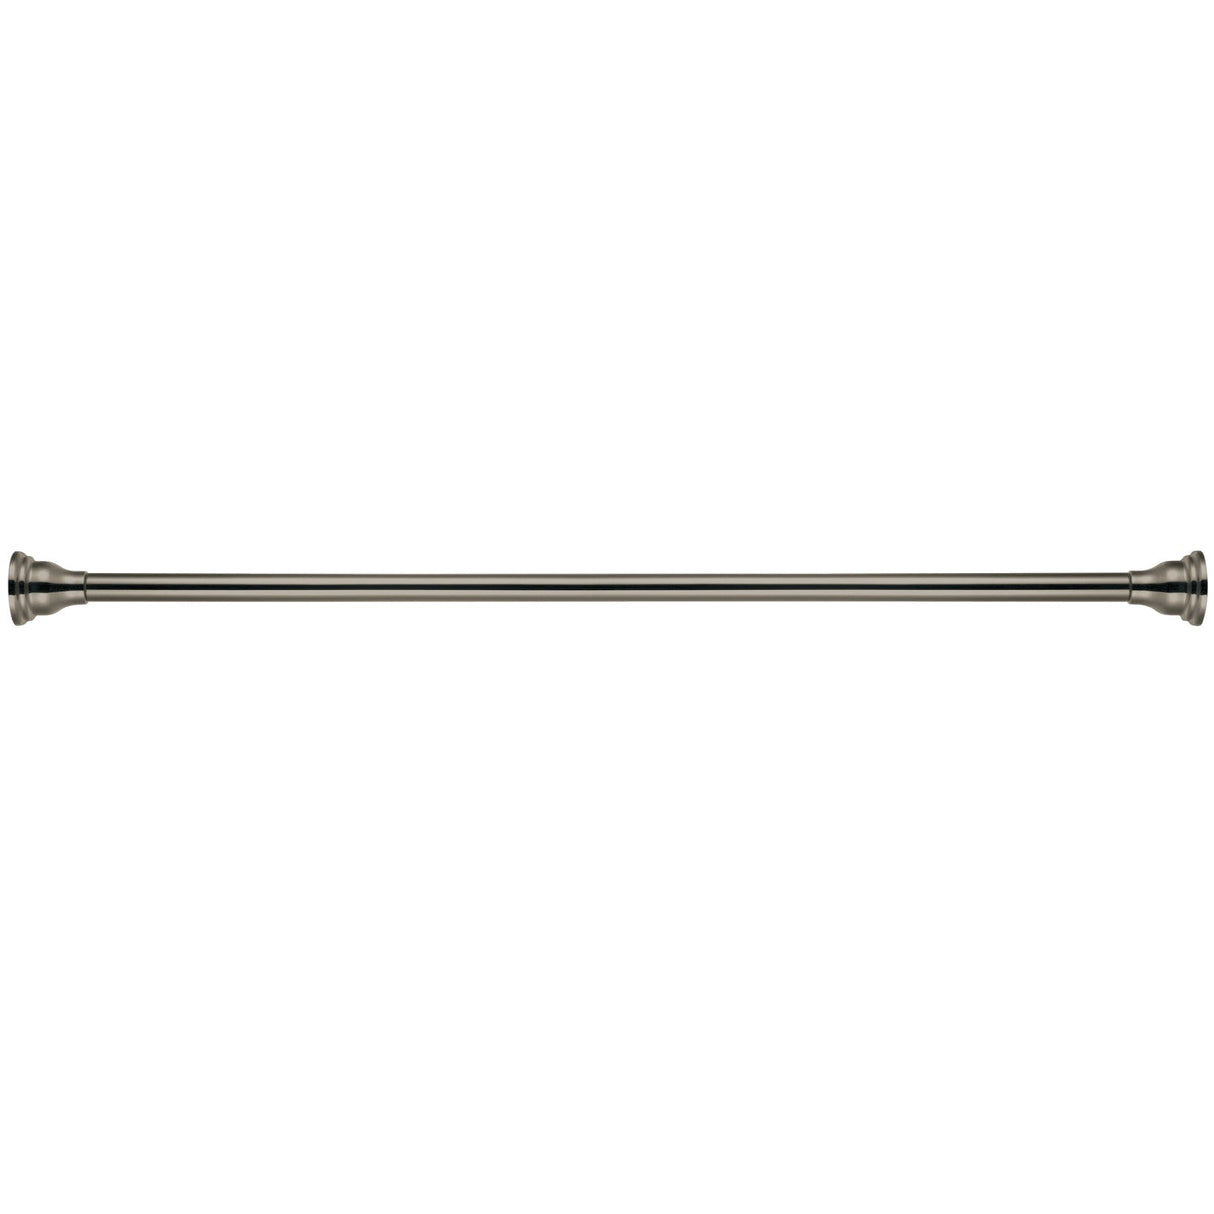 Edenscape SR118 60-Inch to 72-Inch Adjustable Shower Curtain Rod, Brushed Nickel